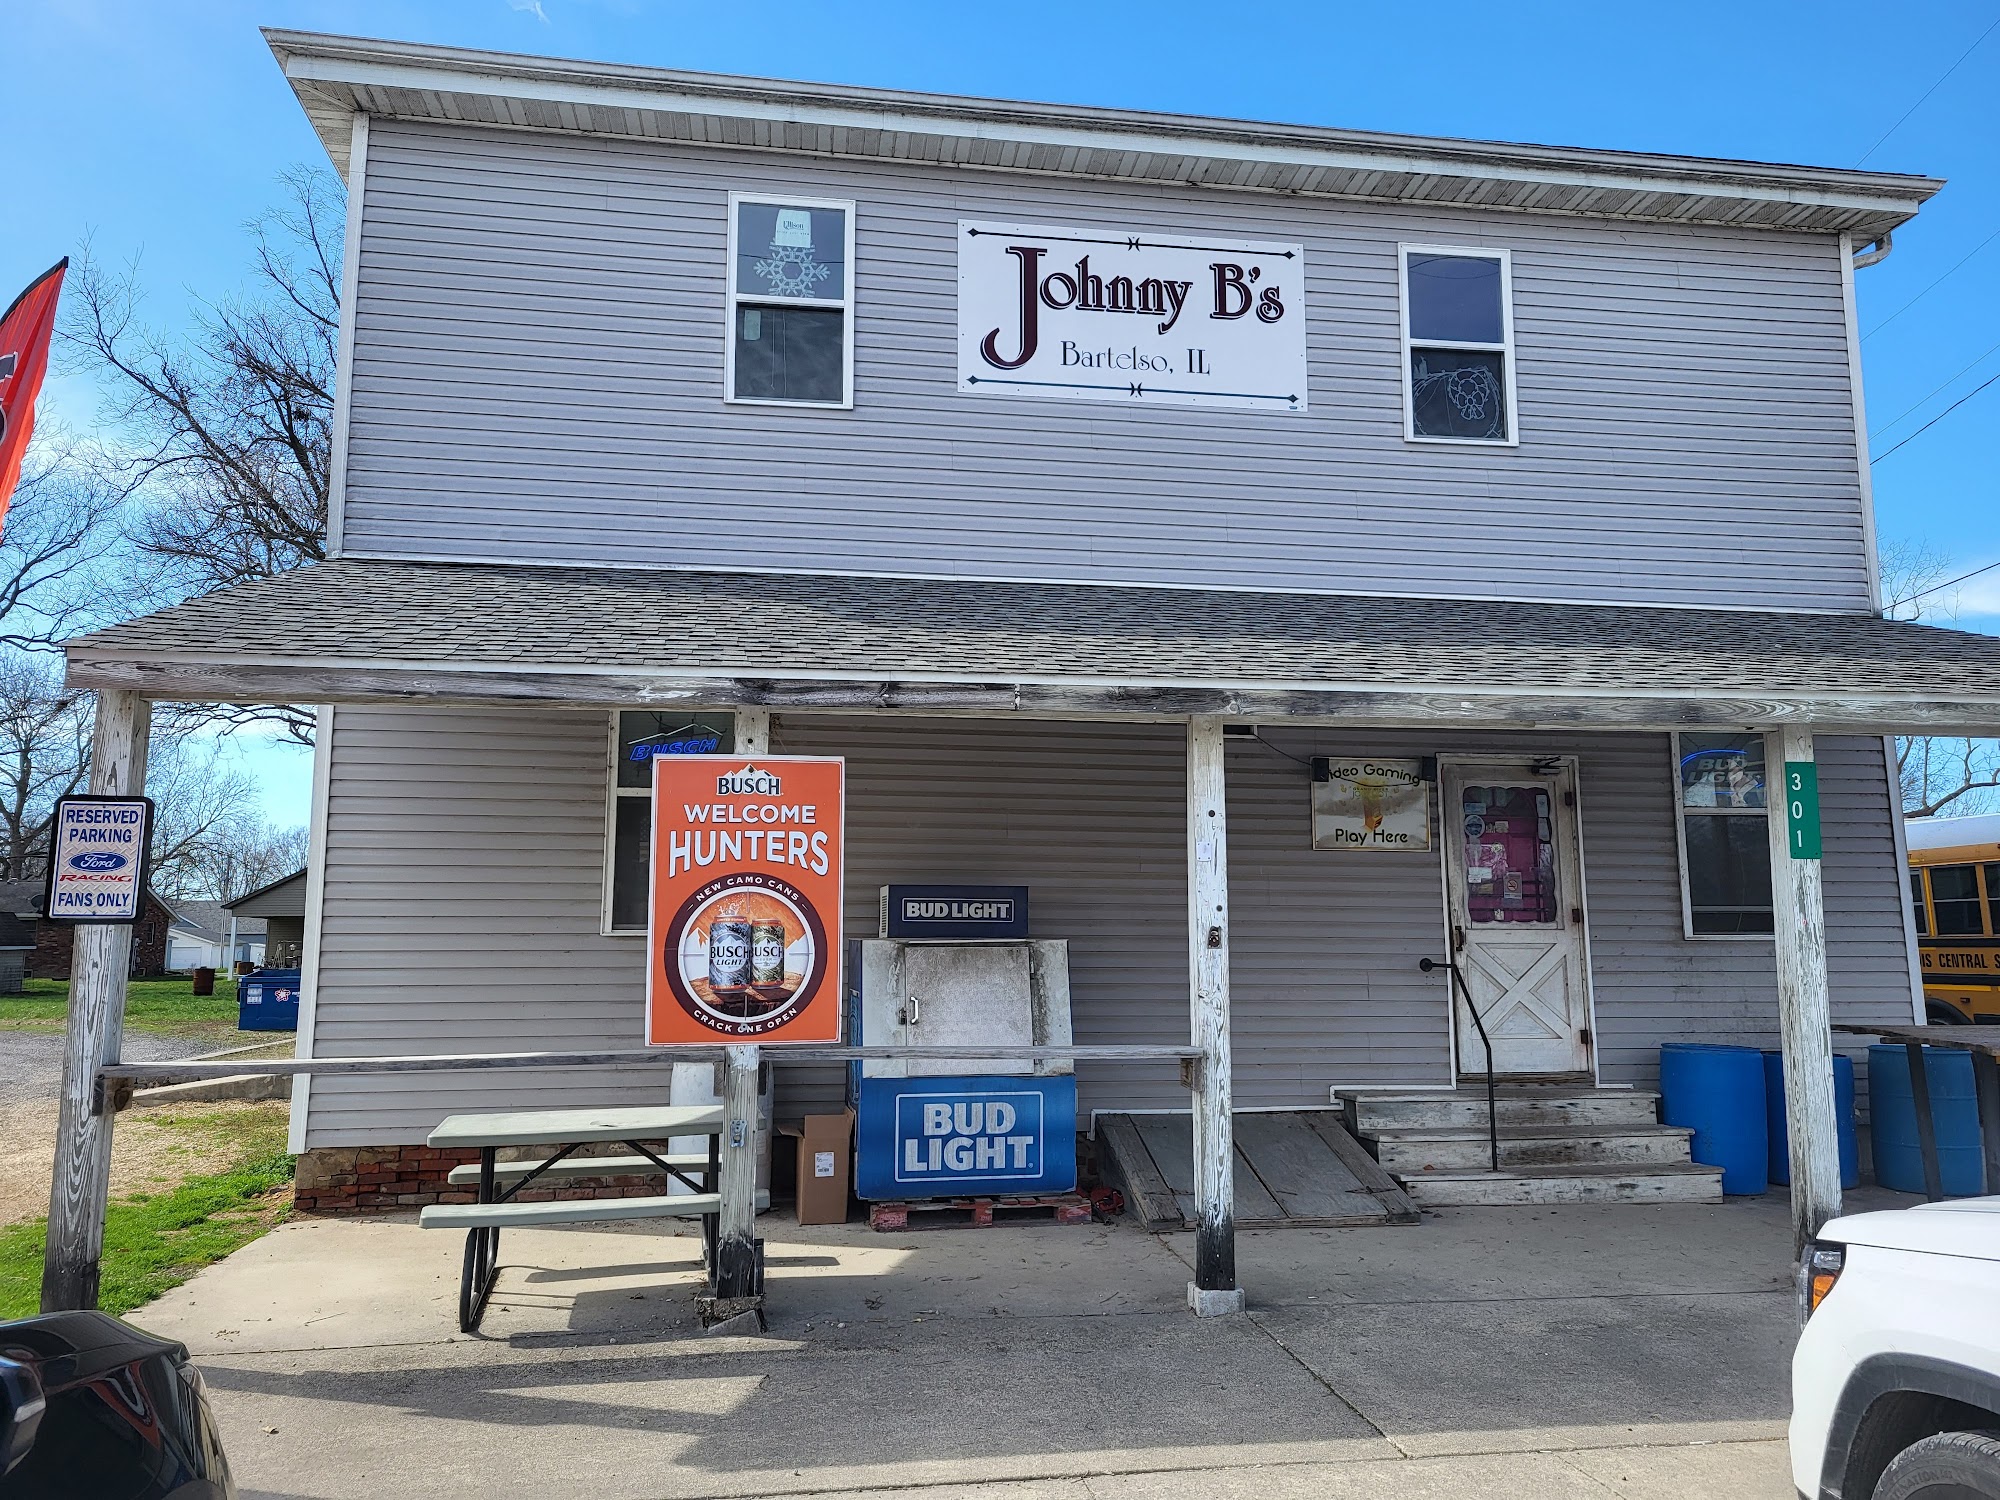 Jonny B's Tavern